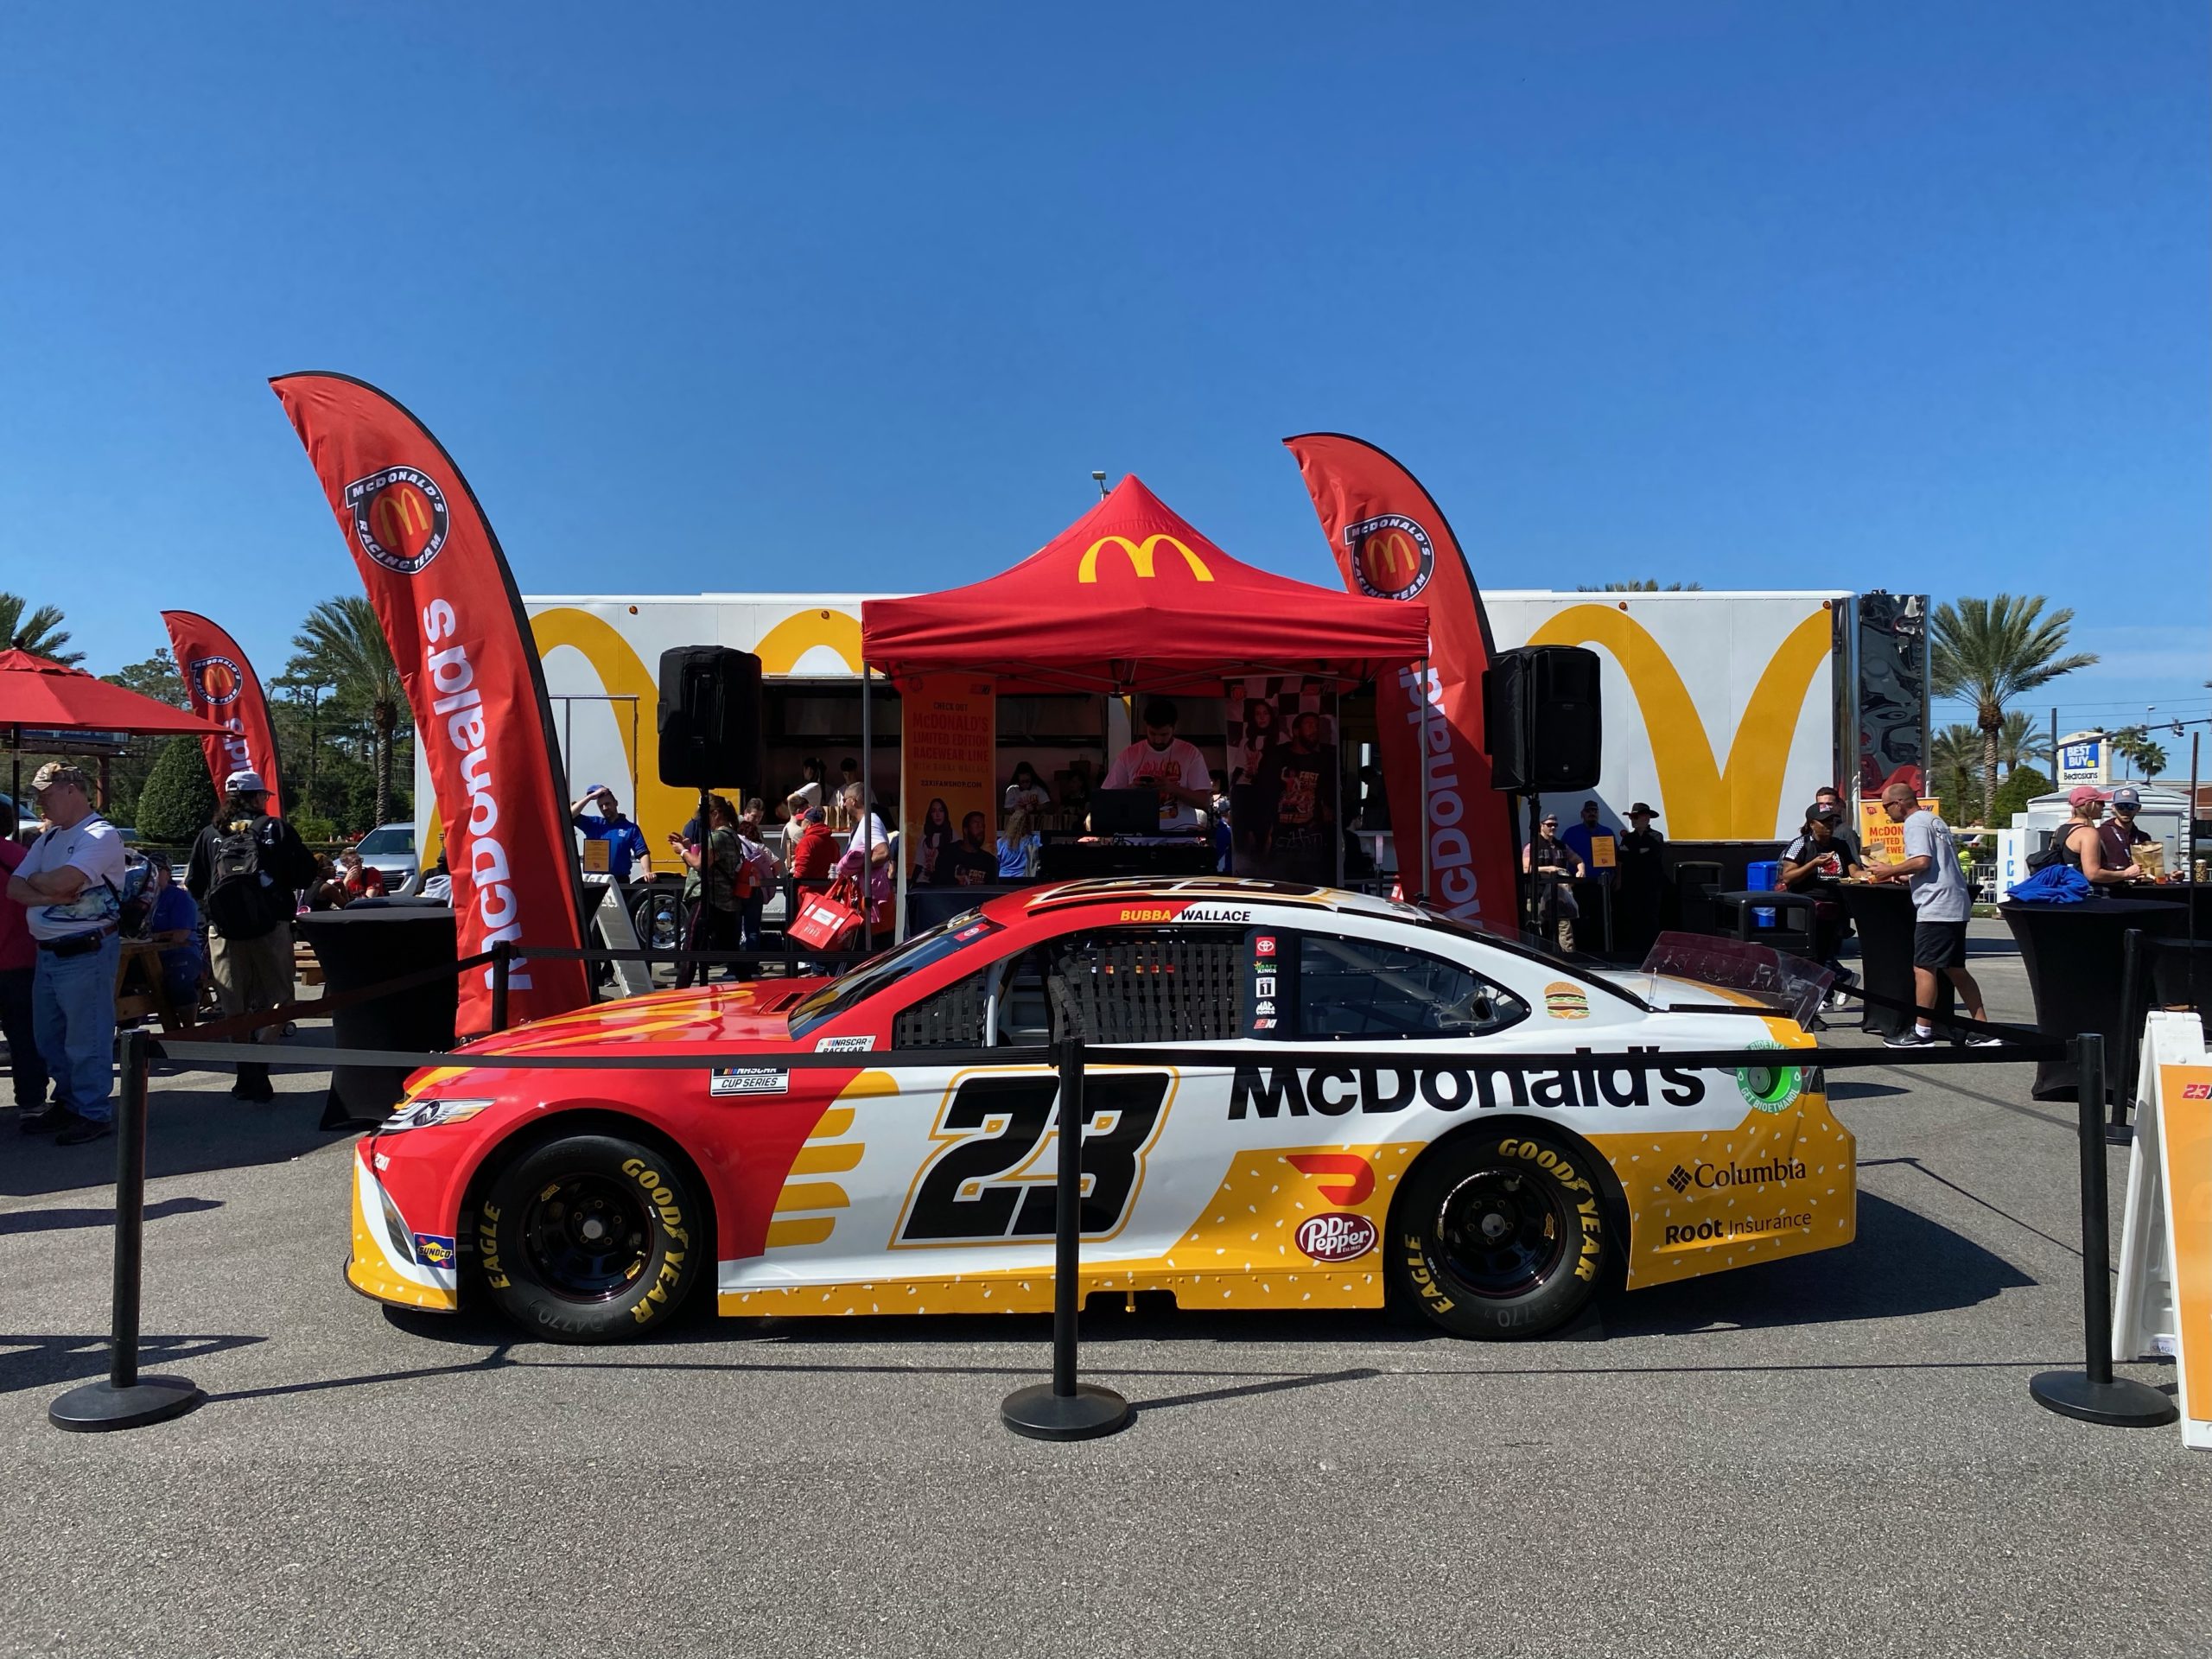 McRig trailer behind a race car